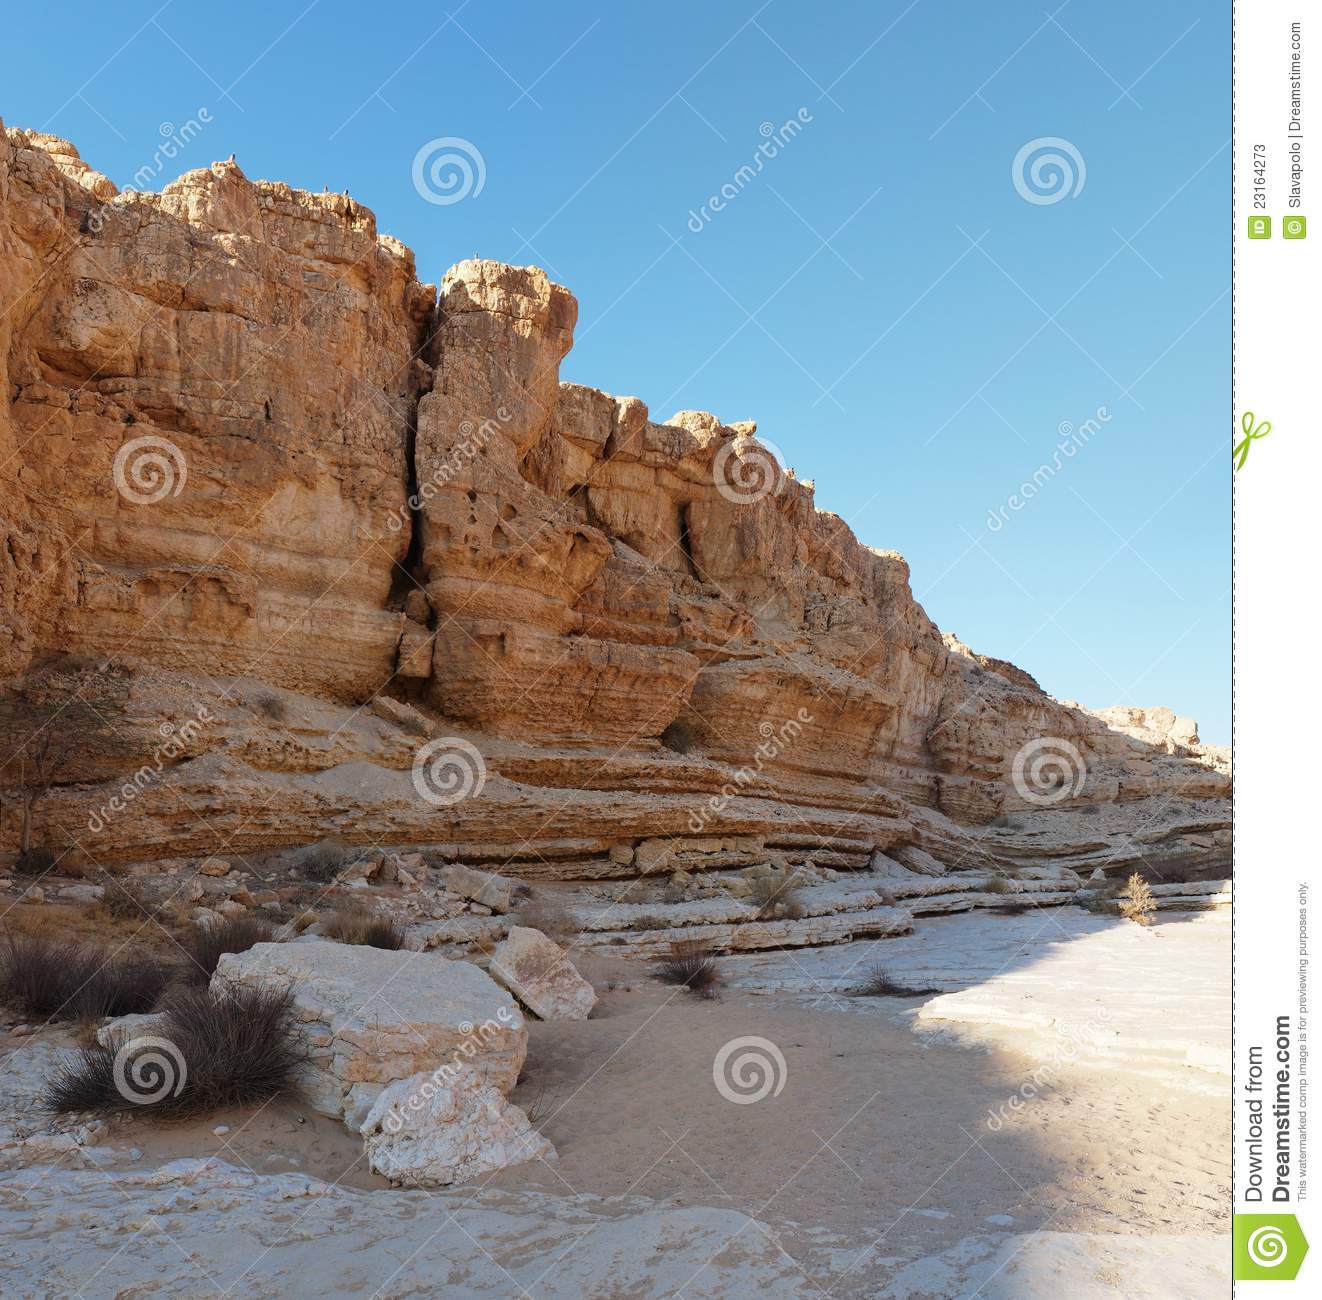 Wall Of Desert Canyon At Sunset Stock Photos   Image  23164273